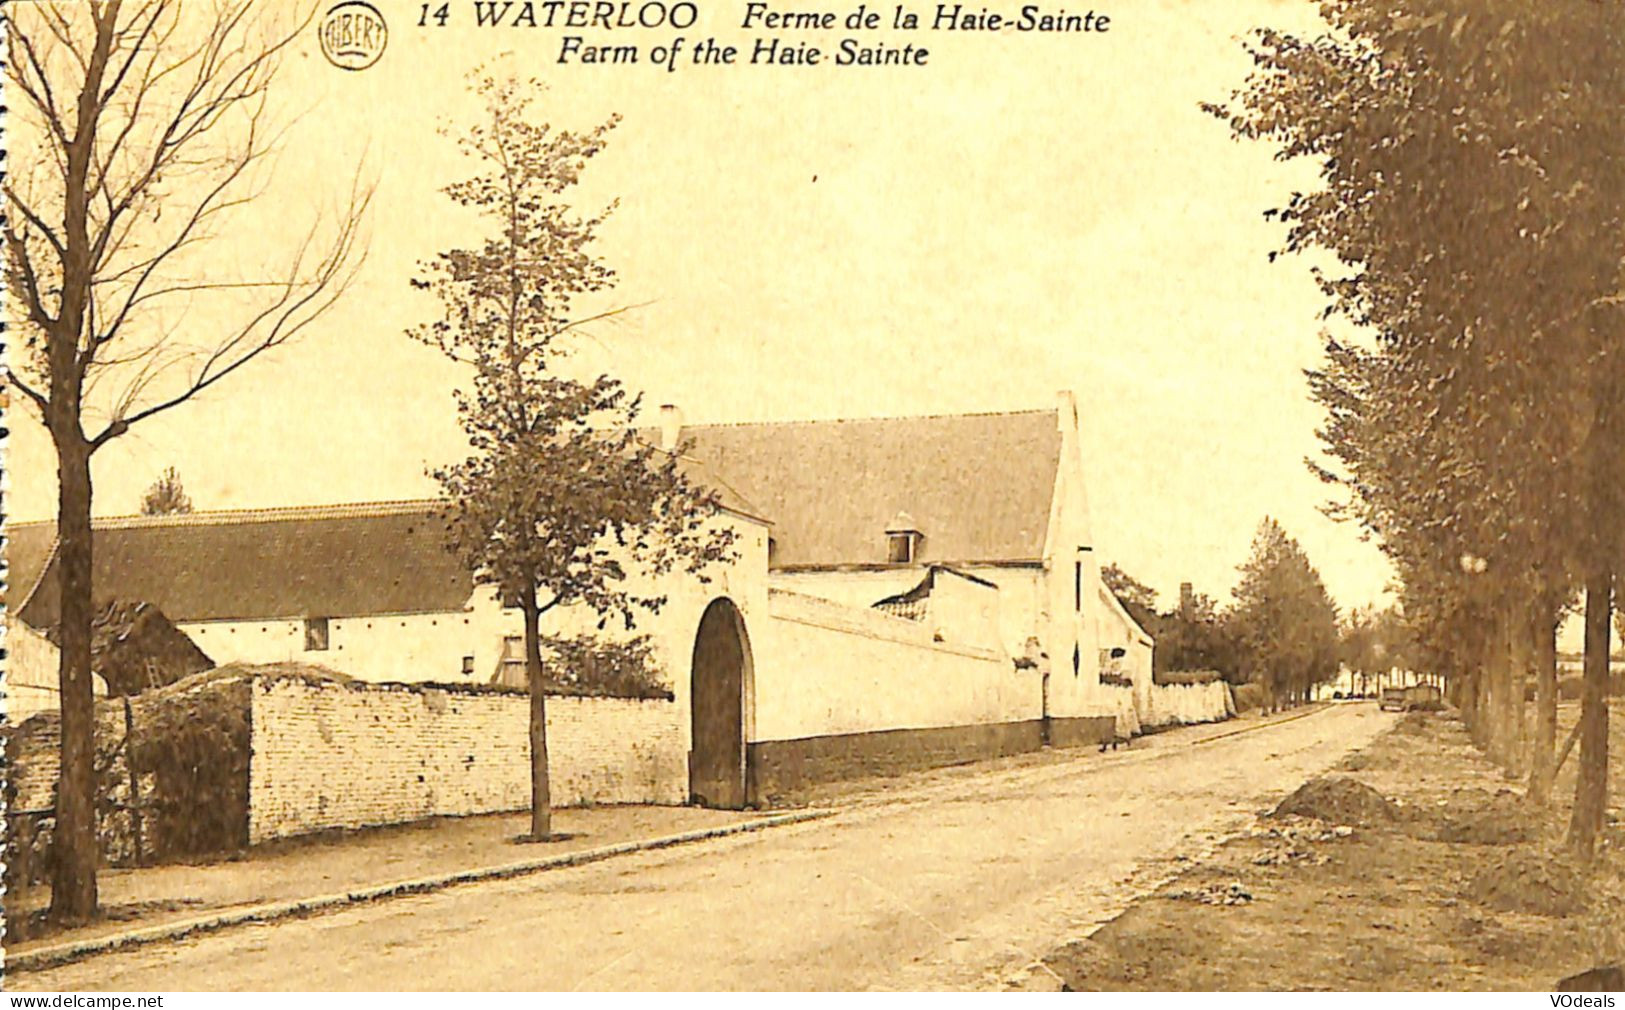 Belgique - Brabant Wallon - Waterloo - Ferme De La Haie-Sainte - Farm Of The Haie-Sainte - Waterloo